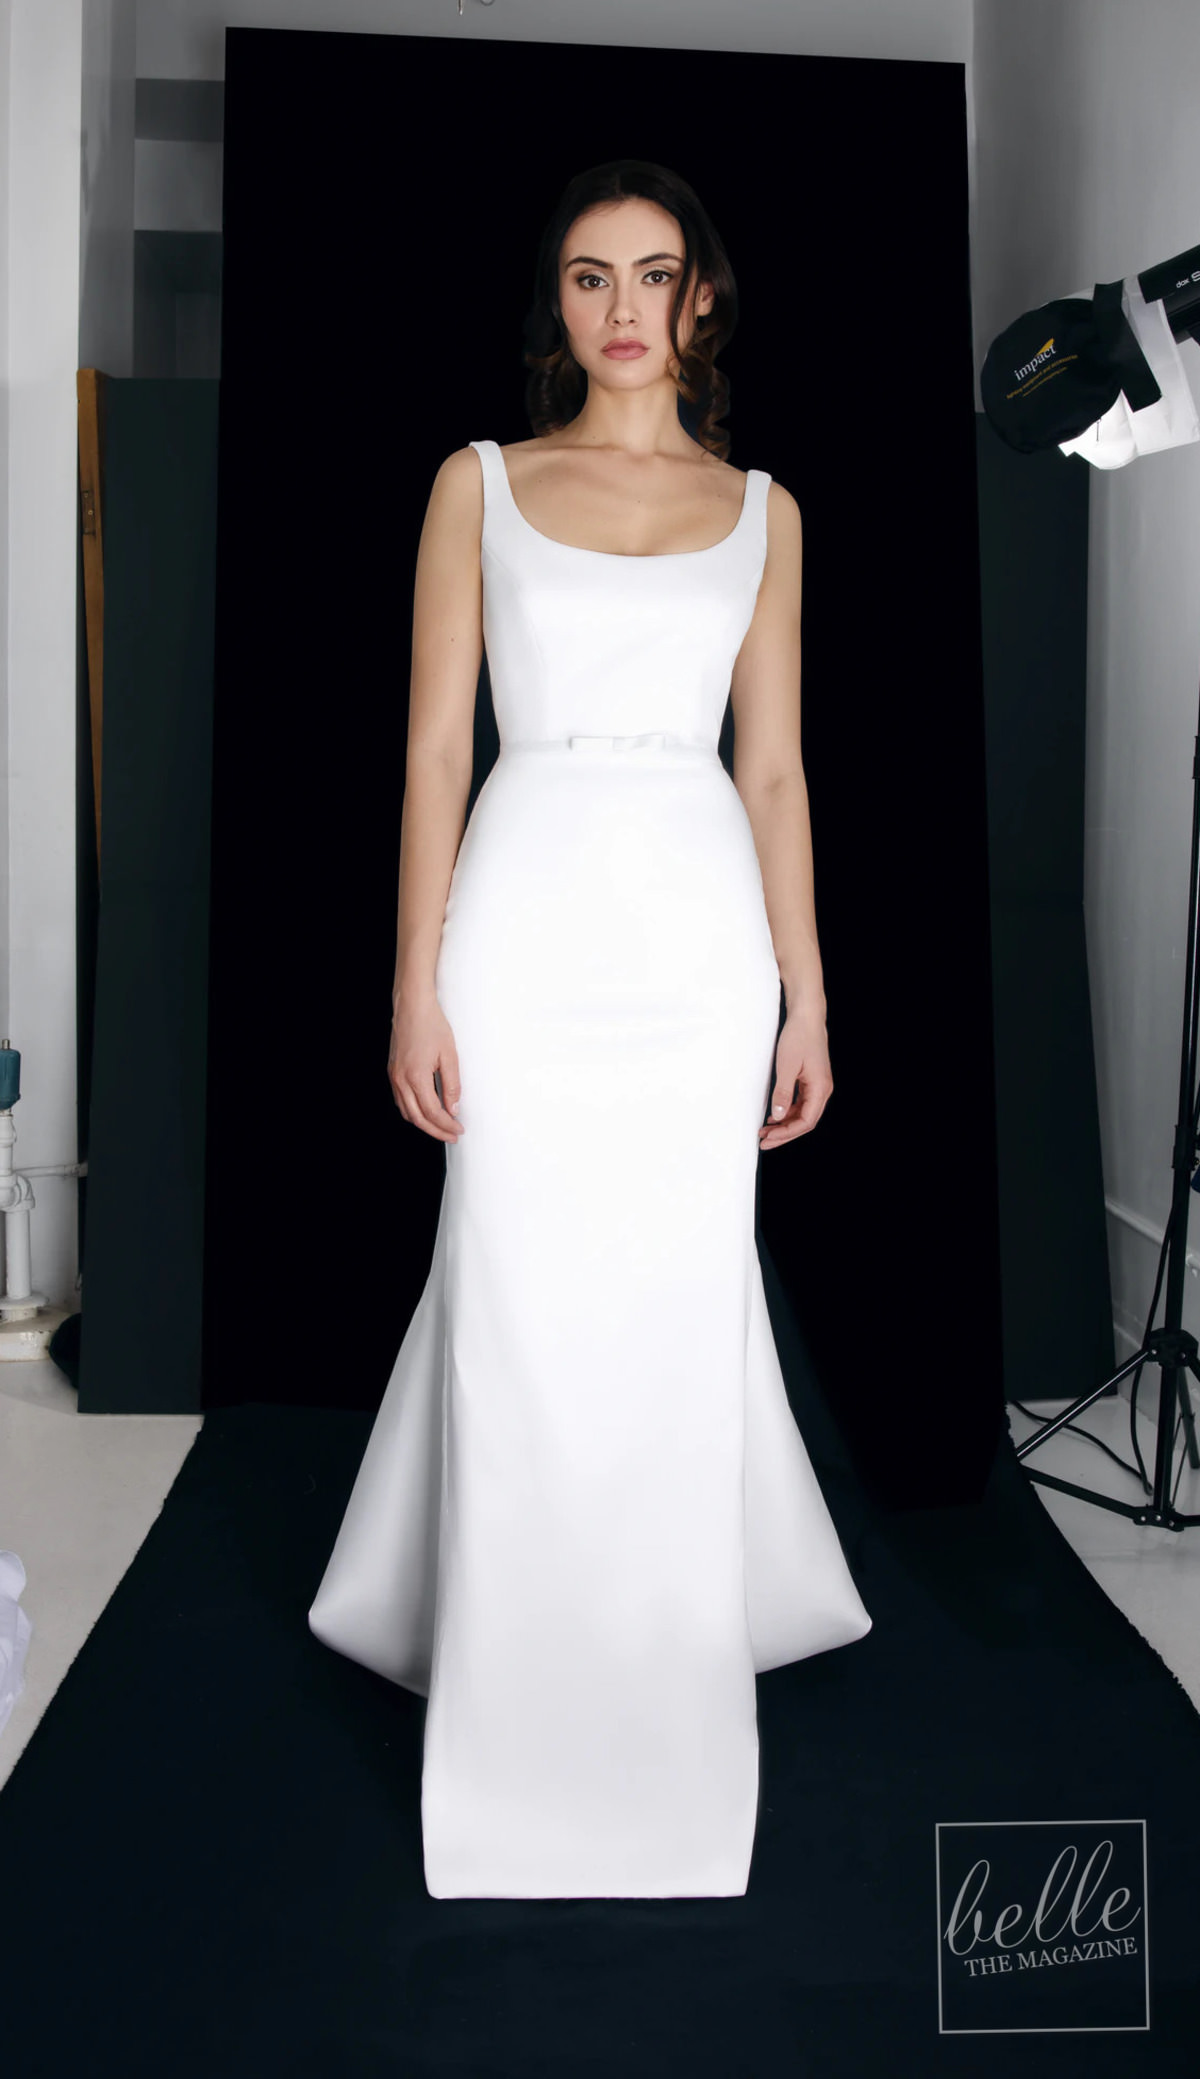 Wedding dress trends 2021 - Minimalist gown - Verdin Bridal